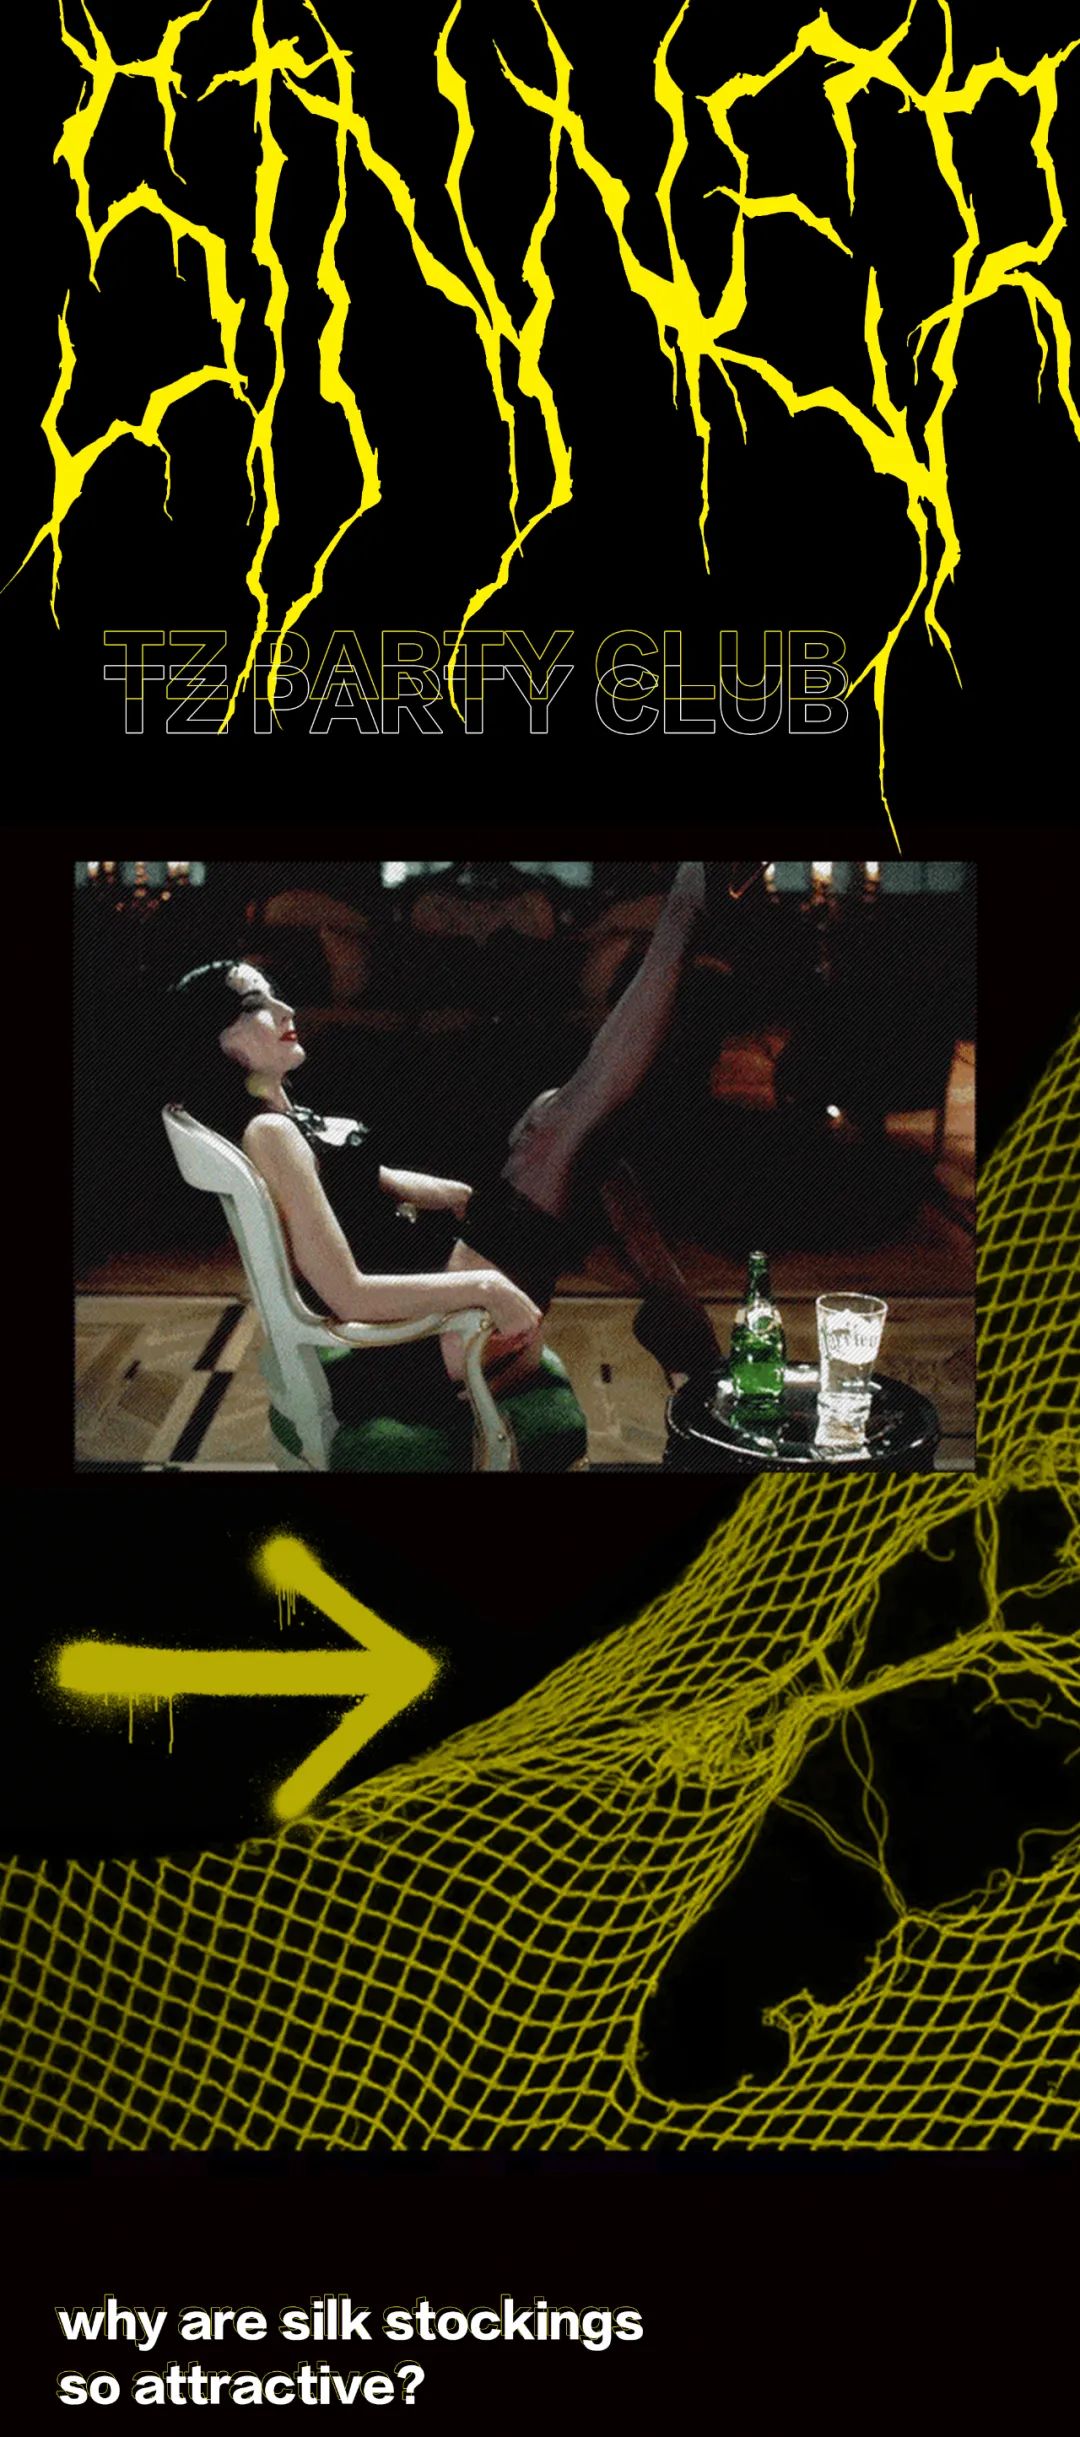 TZ PARTY CLUB丨五一劳动节是“丝袜派对”还是“撕”袜派对，你说了算-南宁TZ酒吧/TZ.Party（江南五一店）